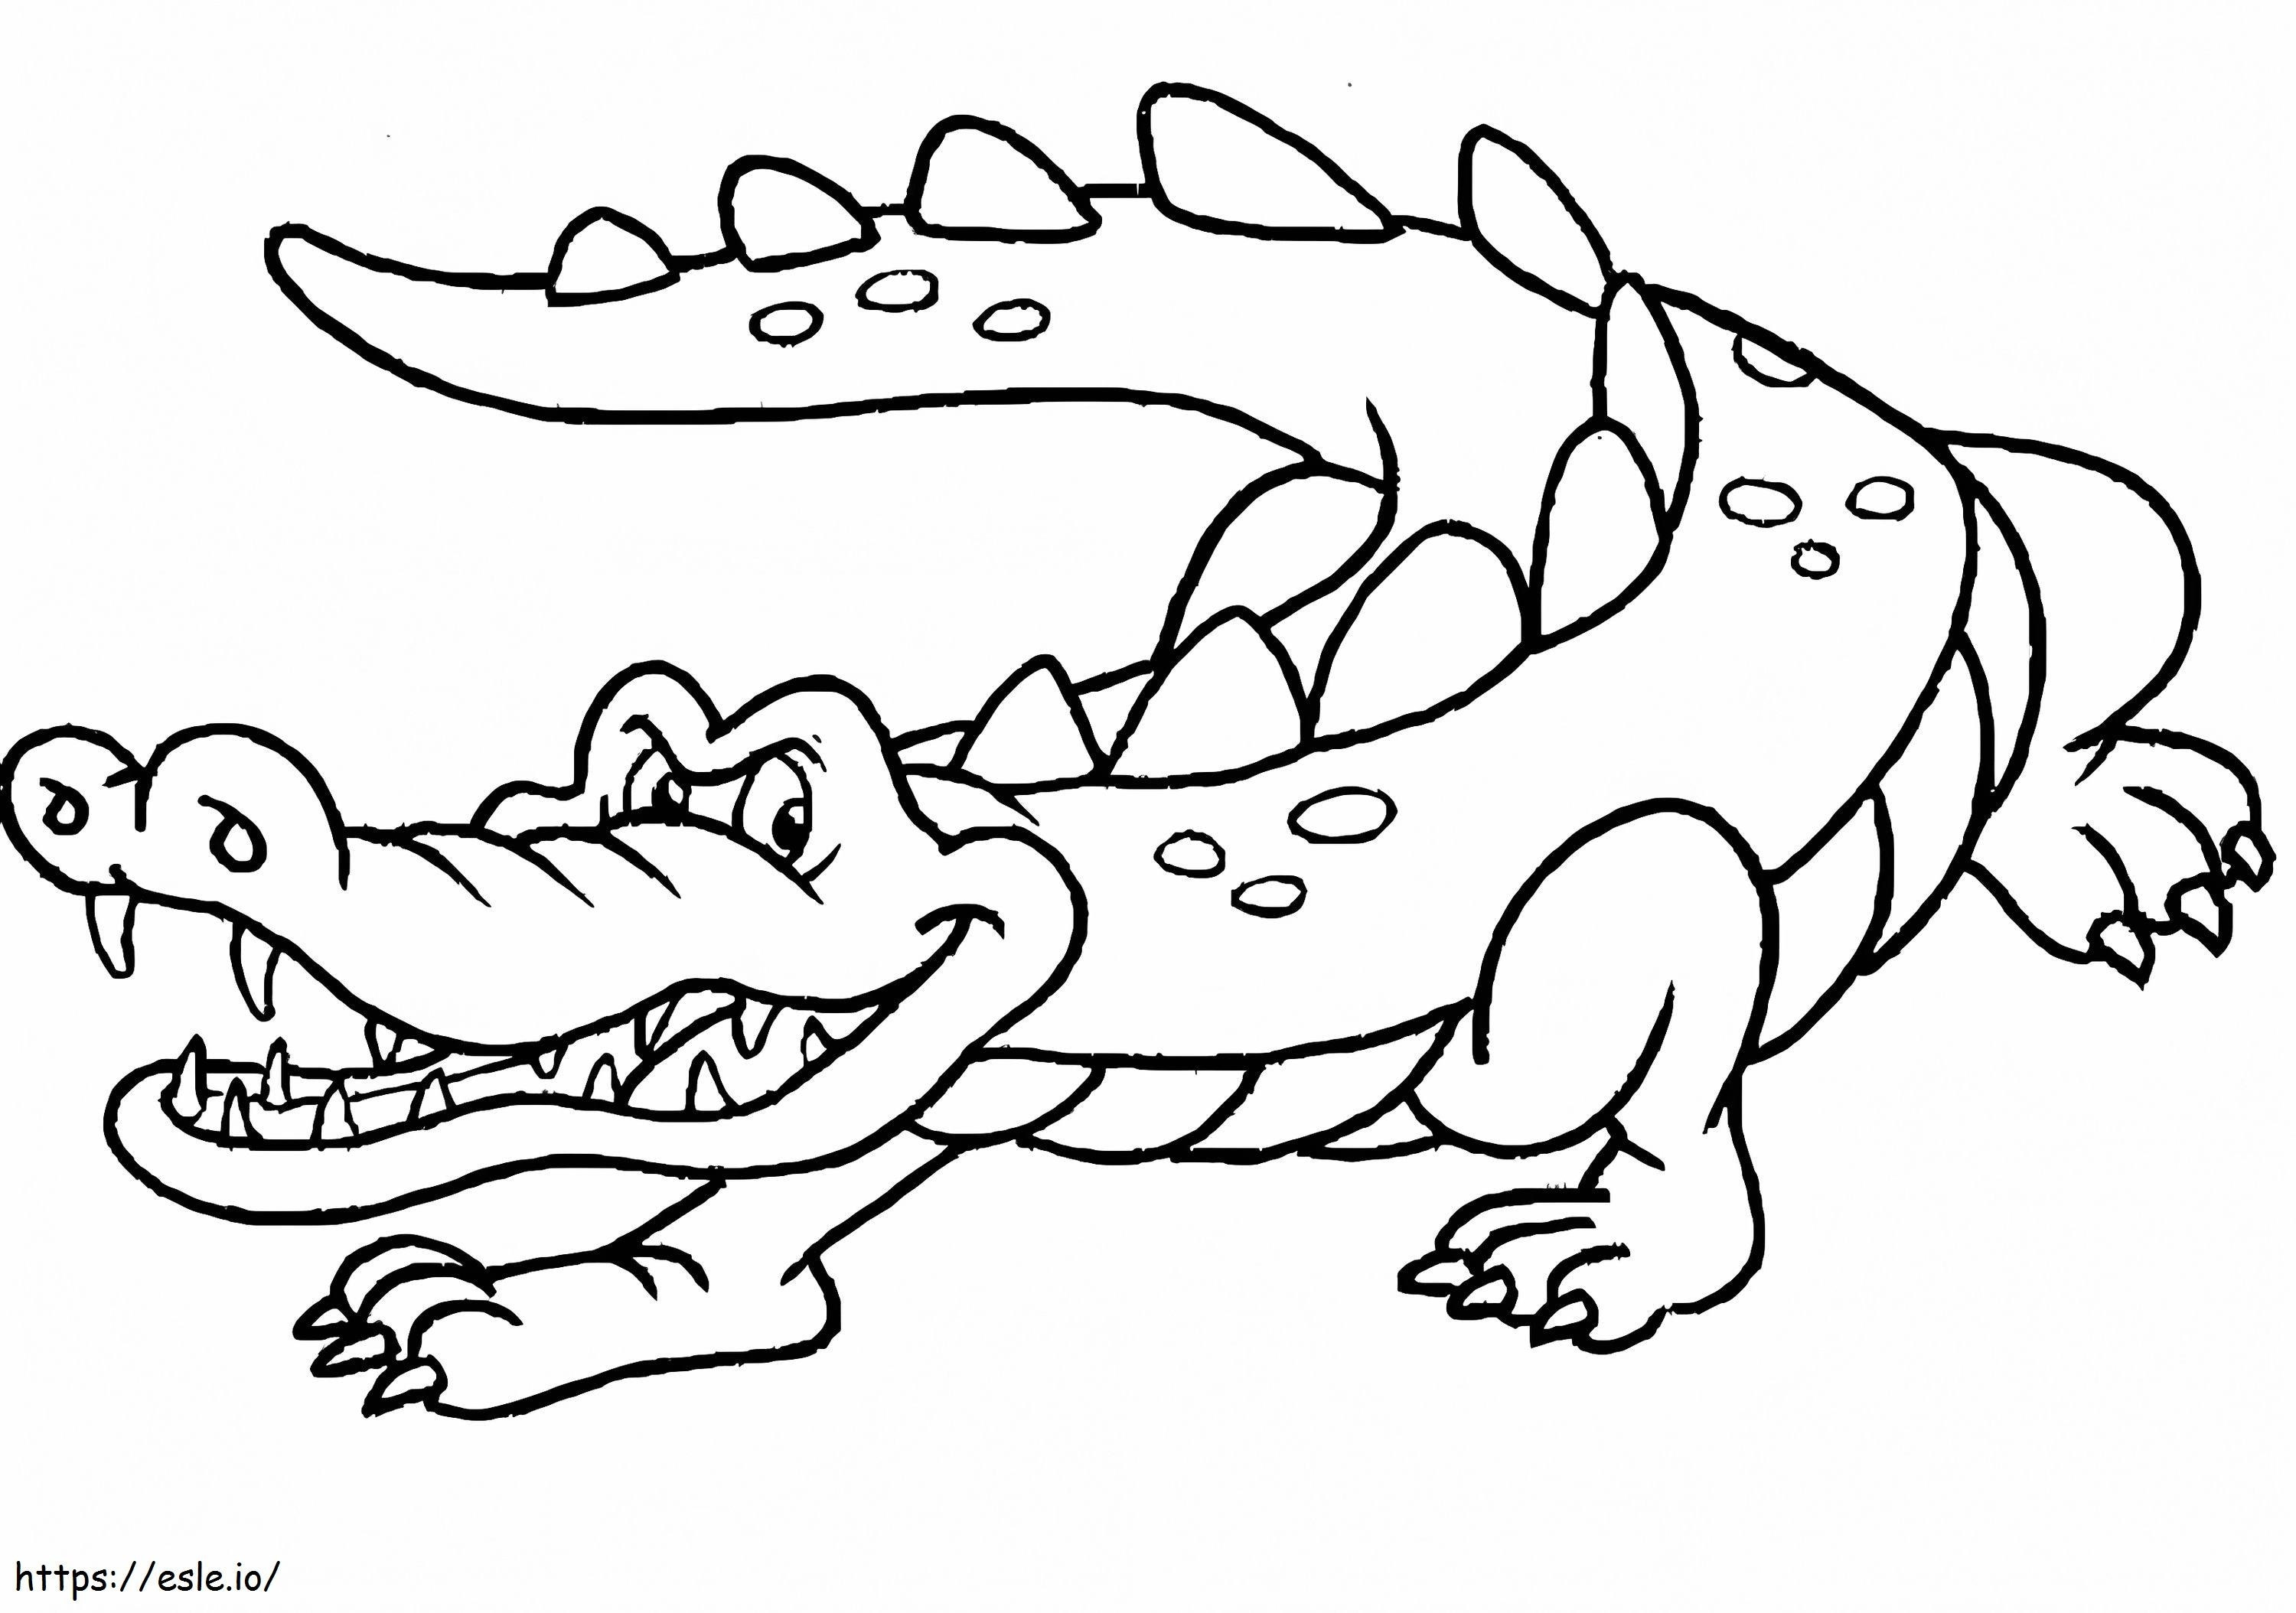 Animated Crocodile coloring page